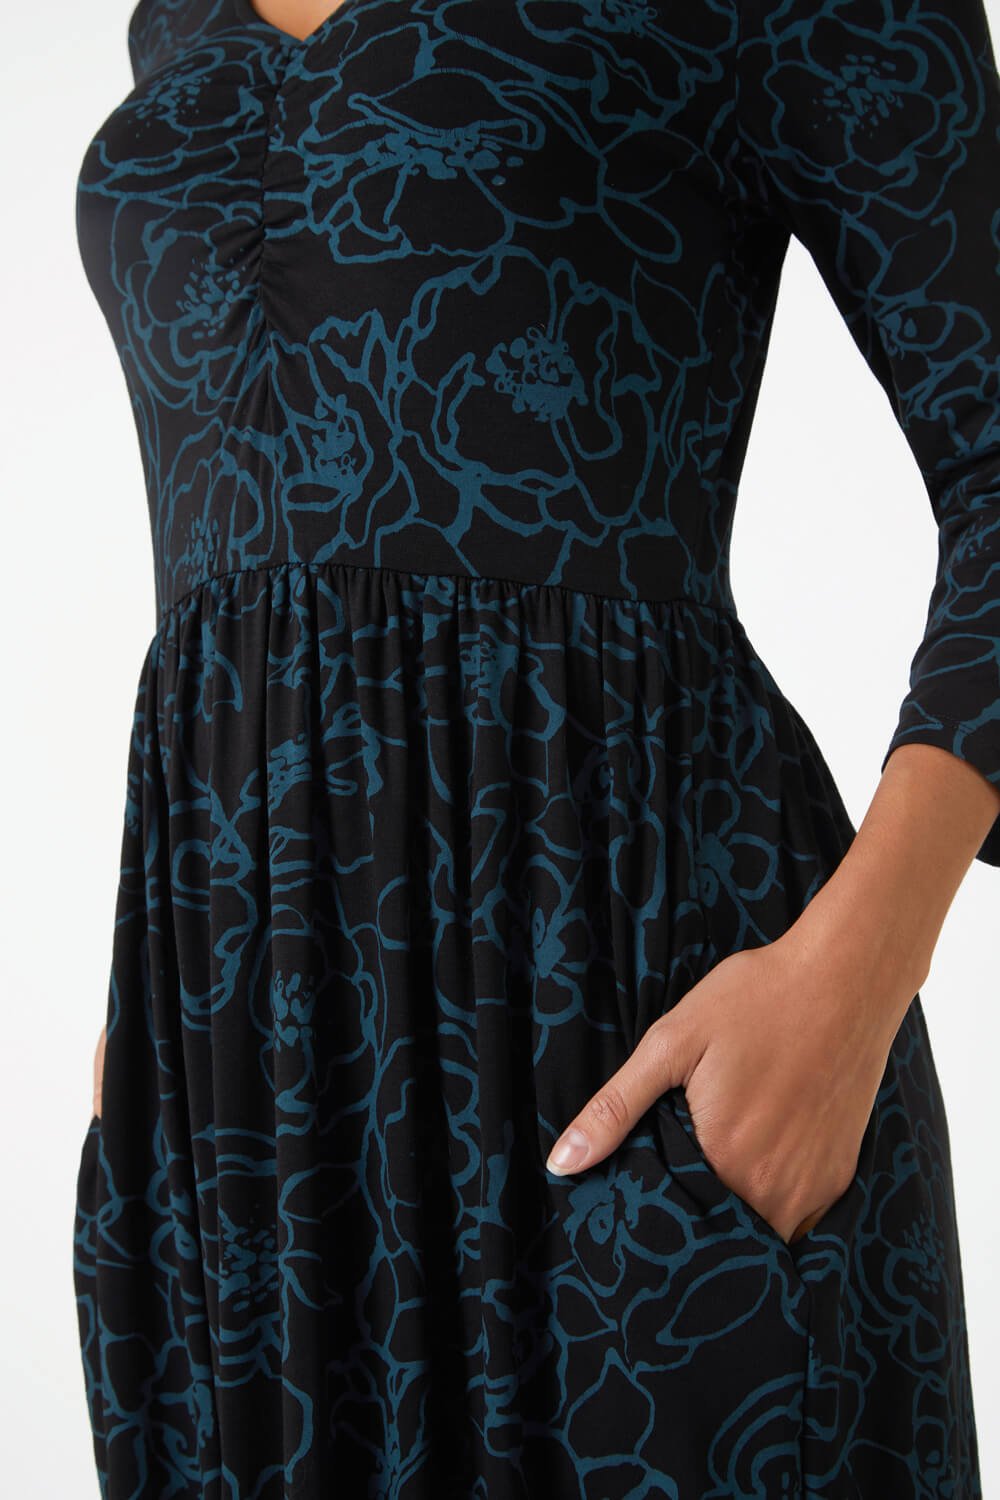 Teal Floral Print Pocket Stretch Midi Dress, Image 5 of 5